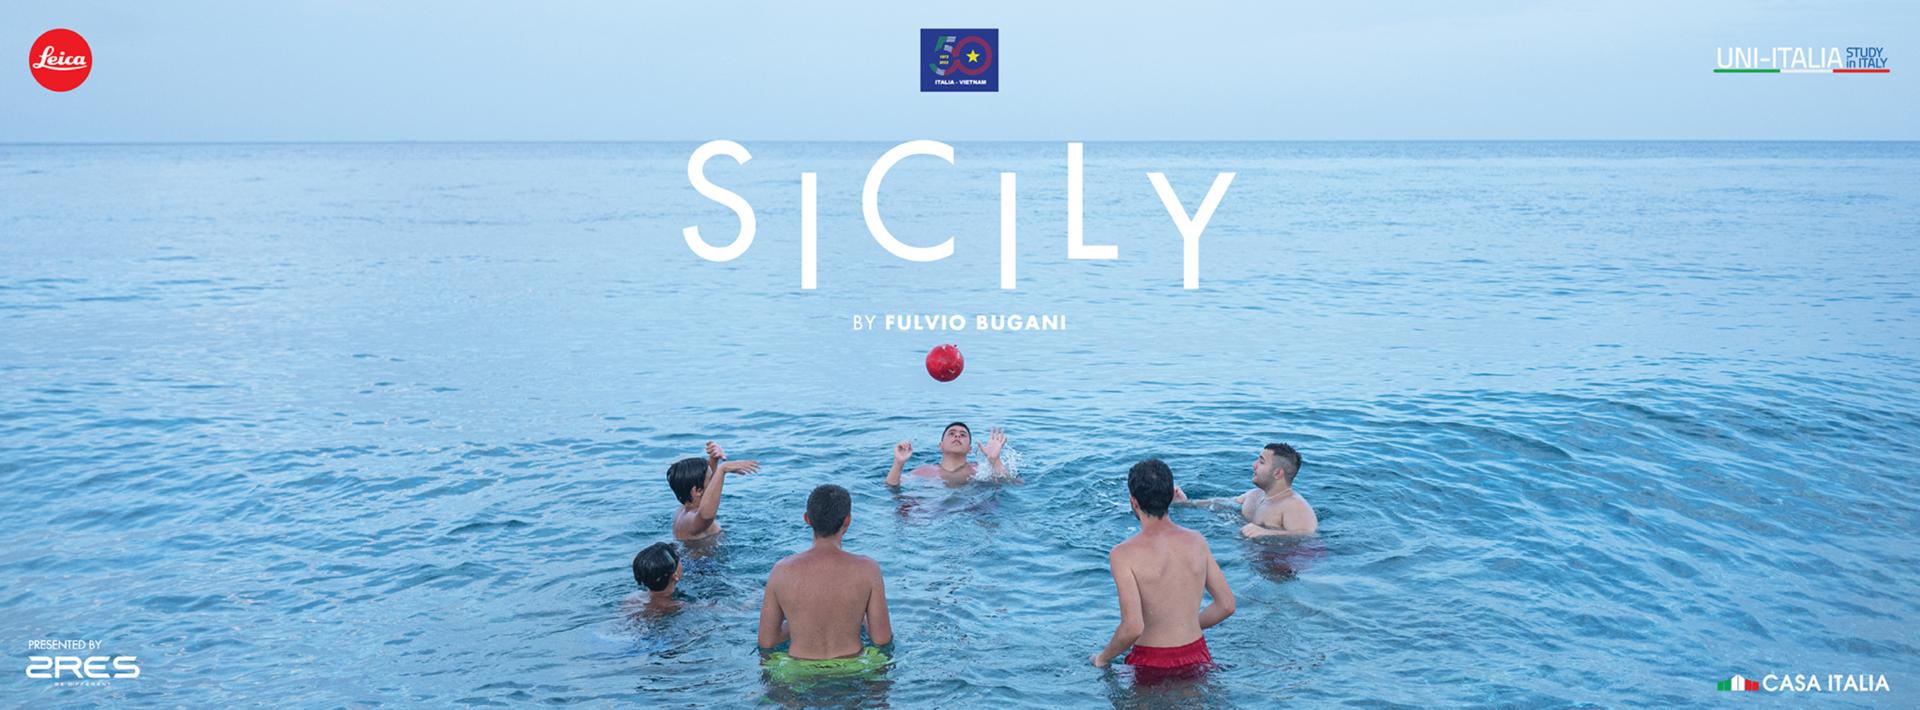 Sicily - Fulvio Bugani